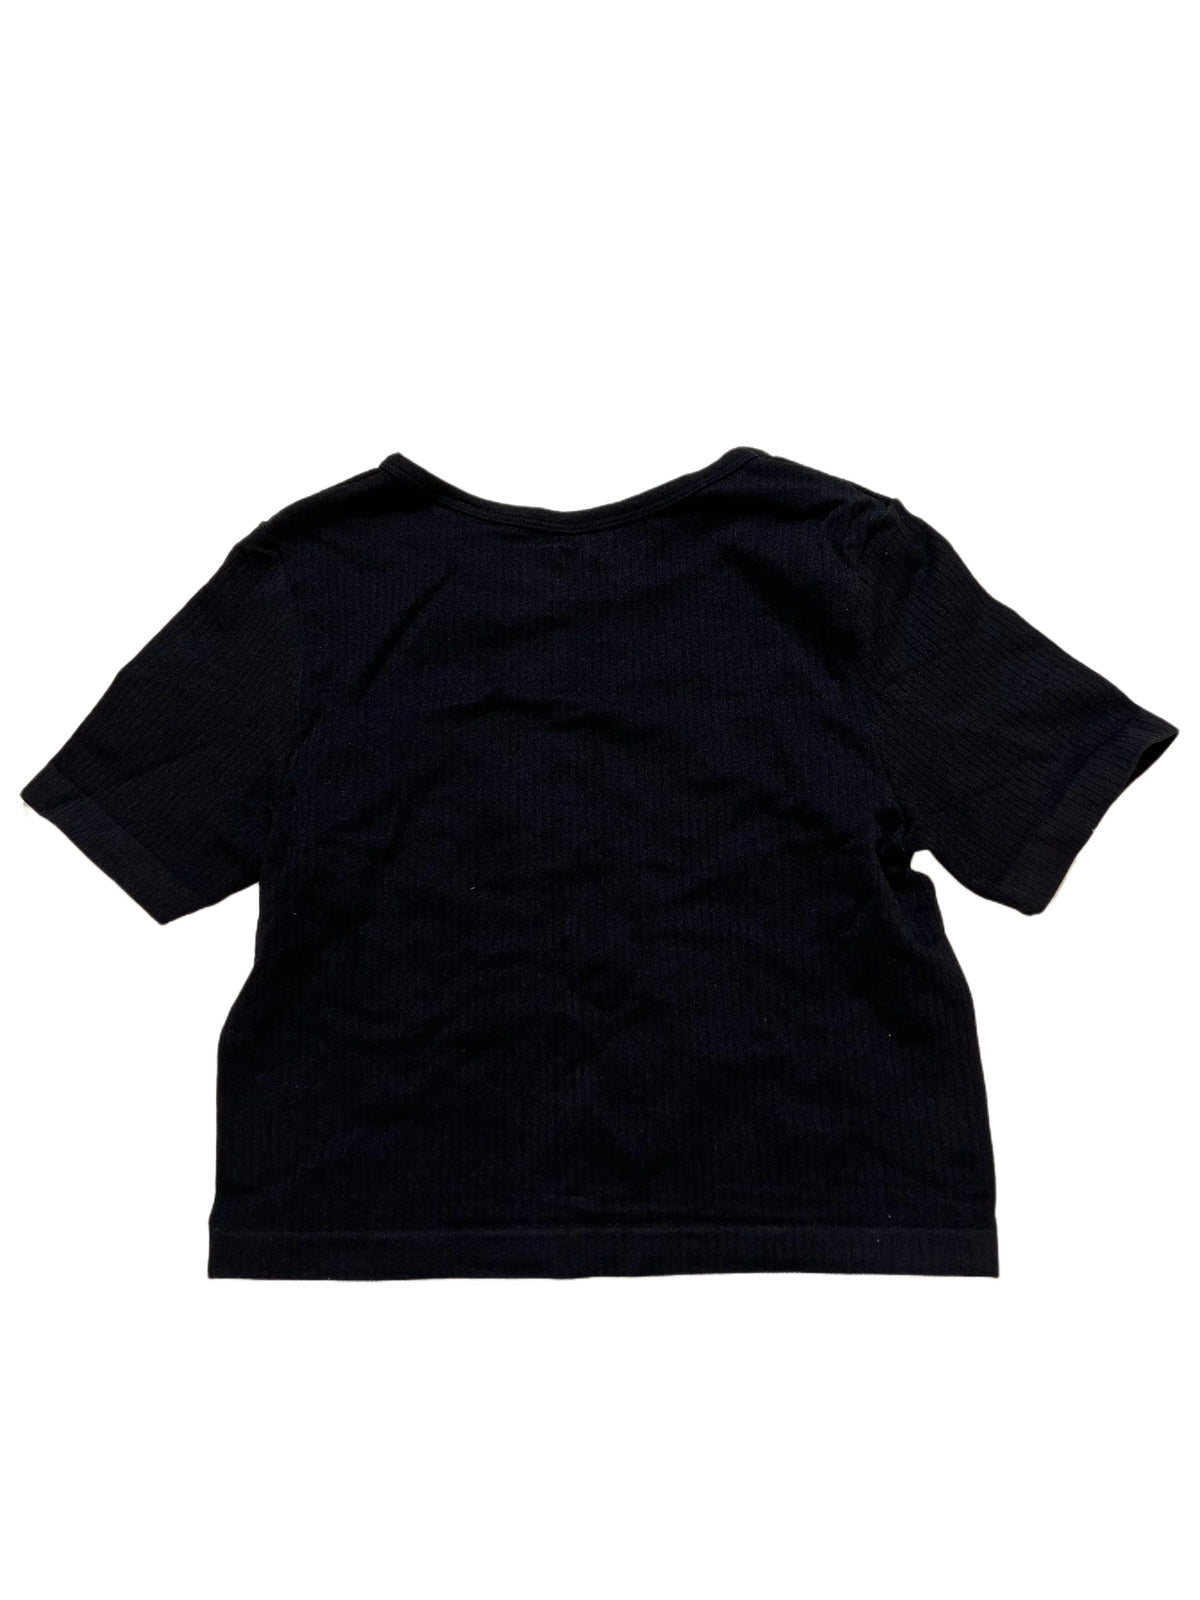 H&M- Black Short Sleeve Ribbed Crop Top